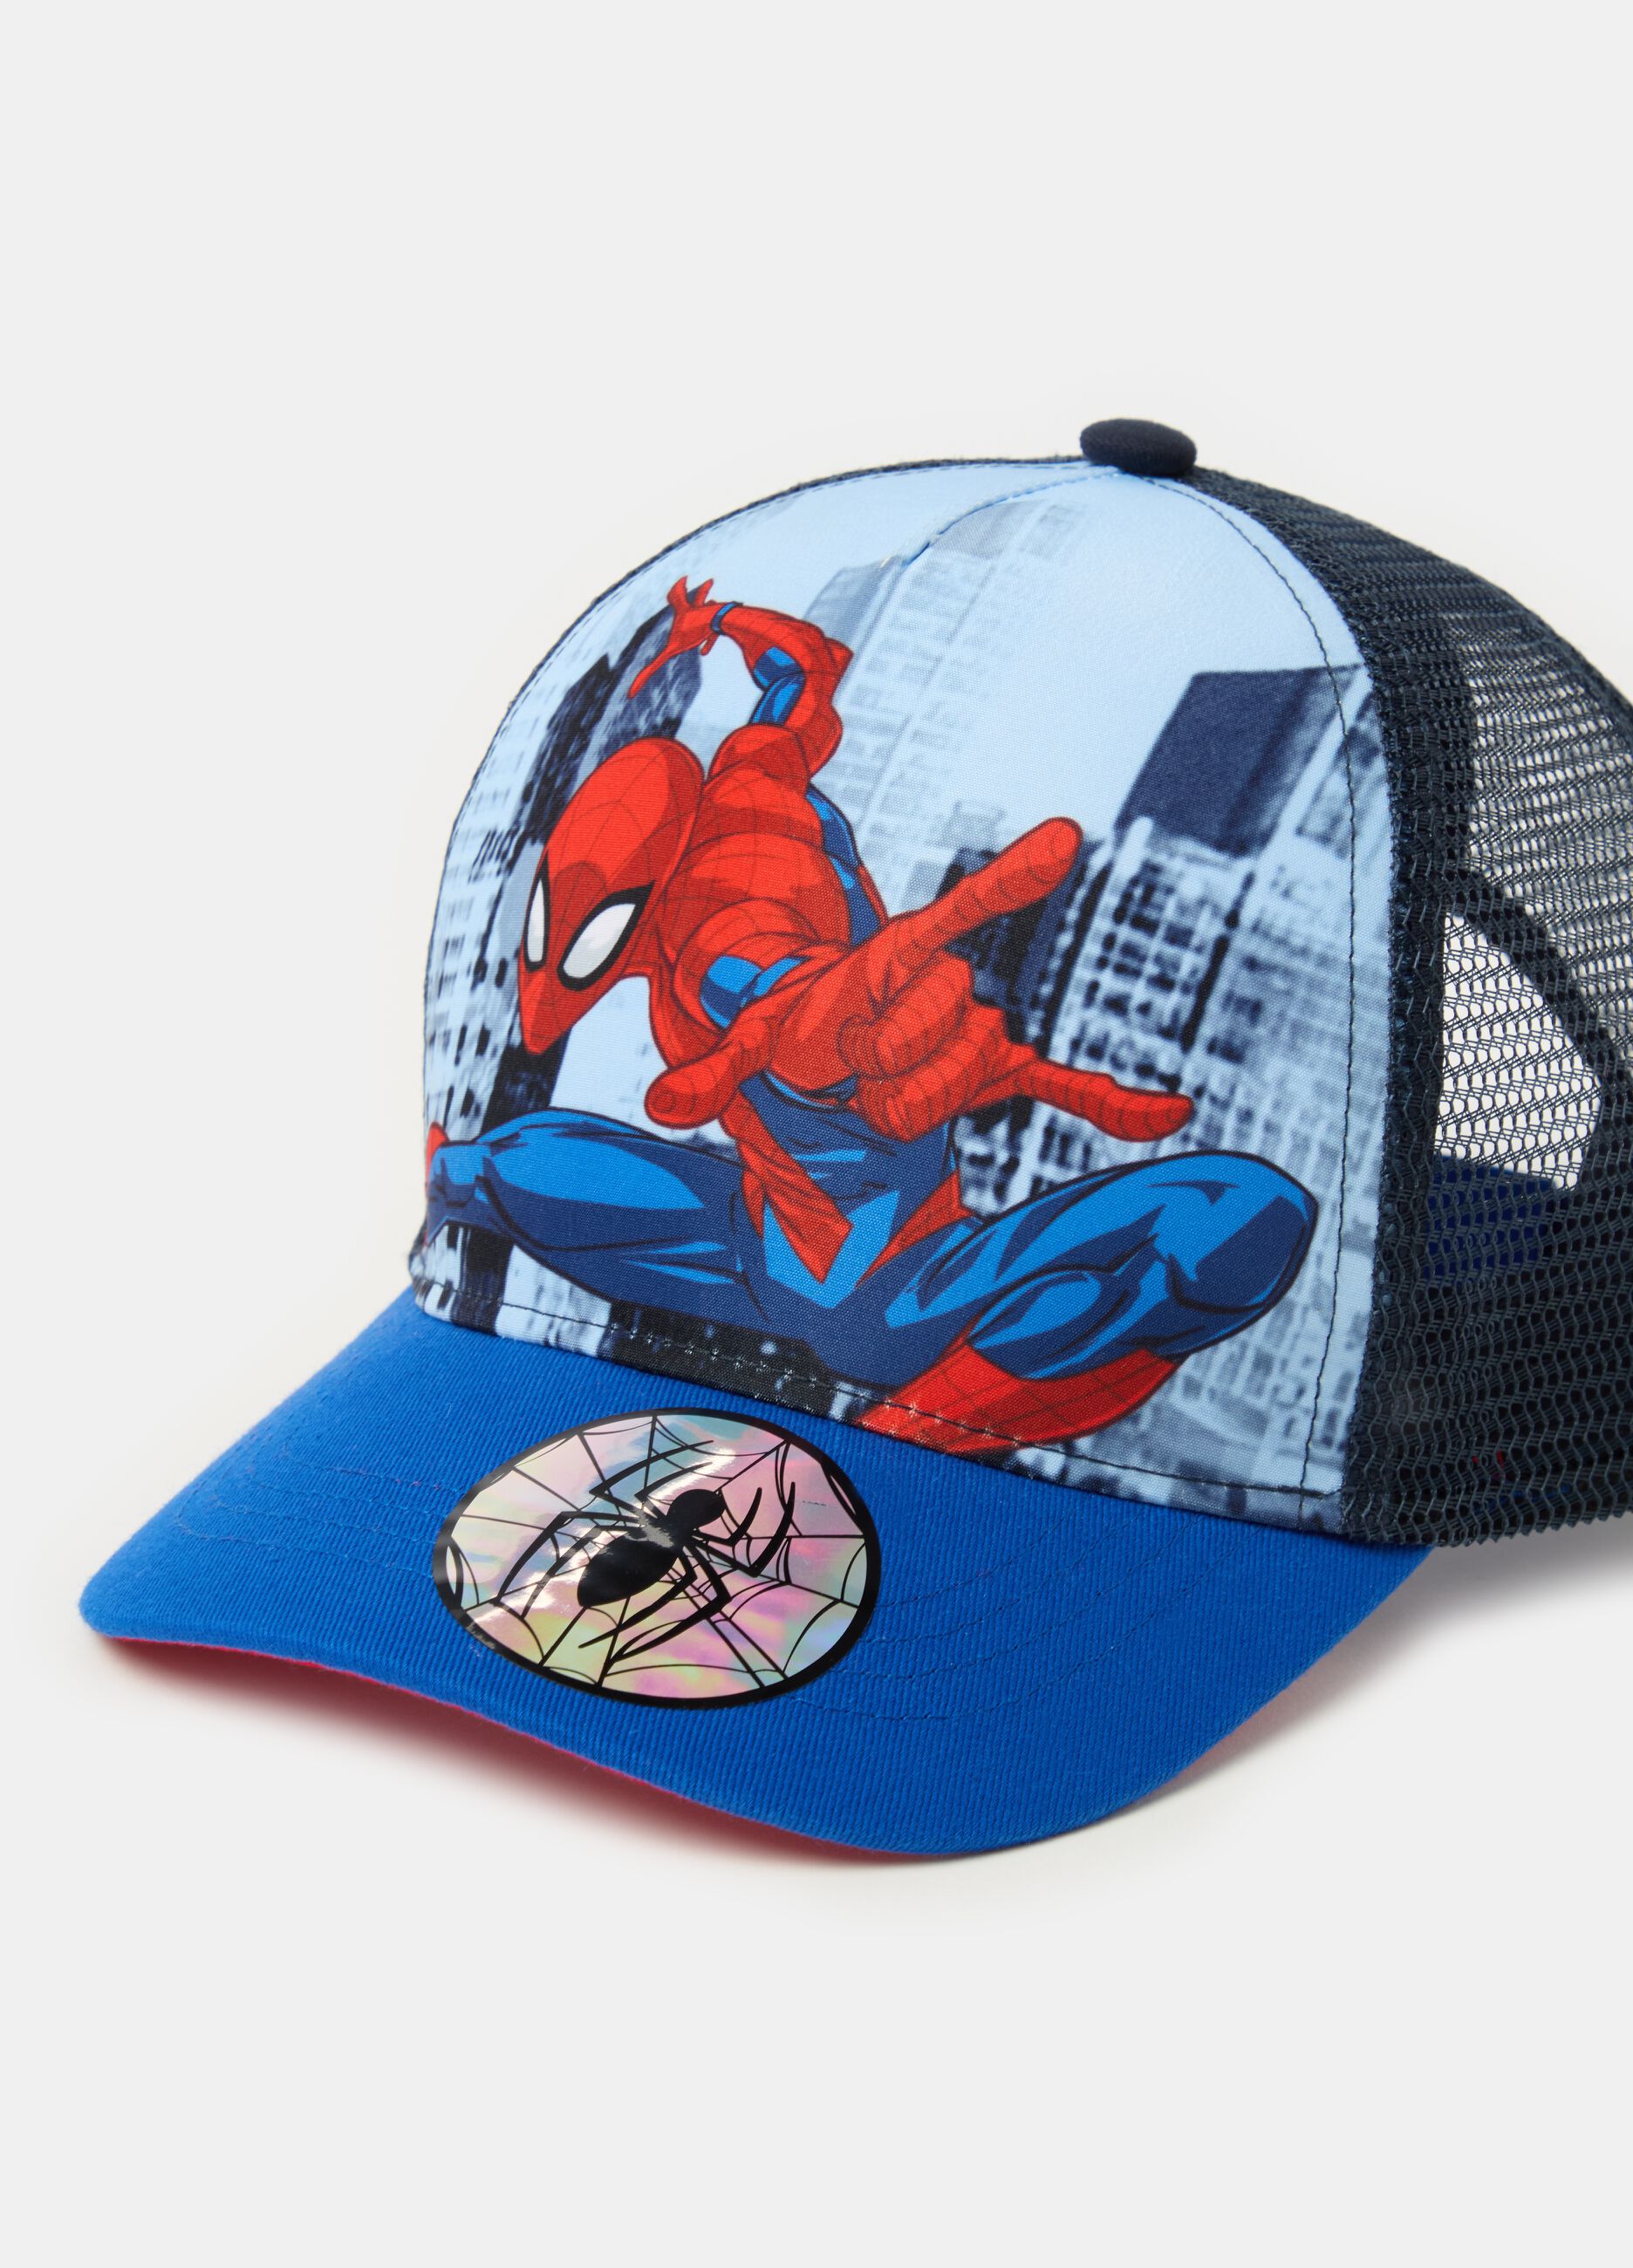 Spider-Man baseball cap